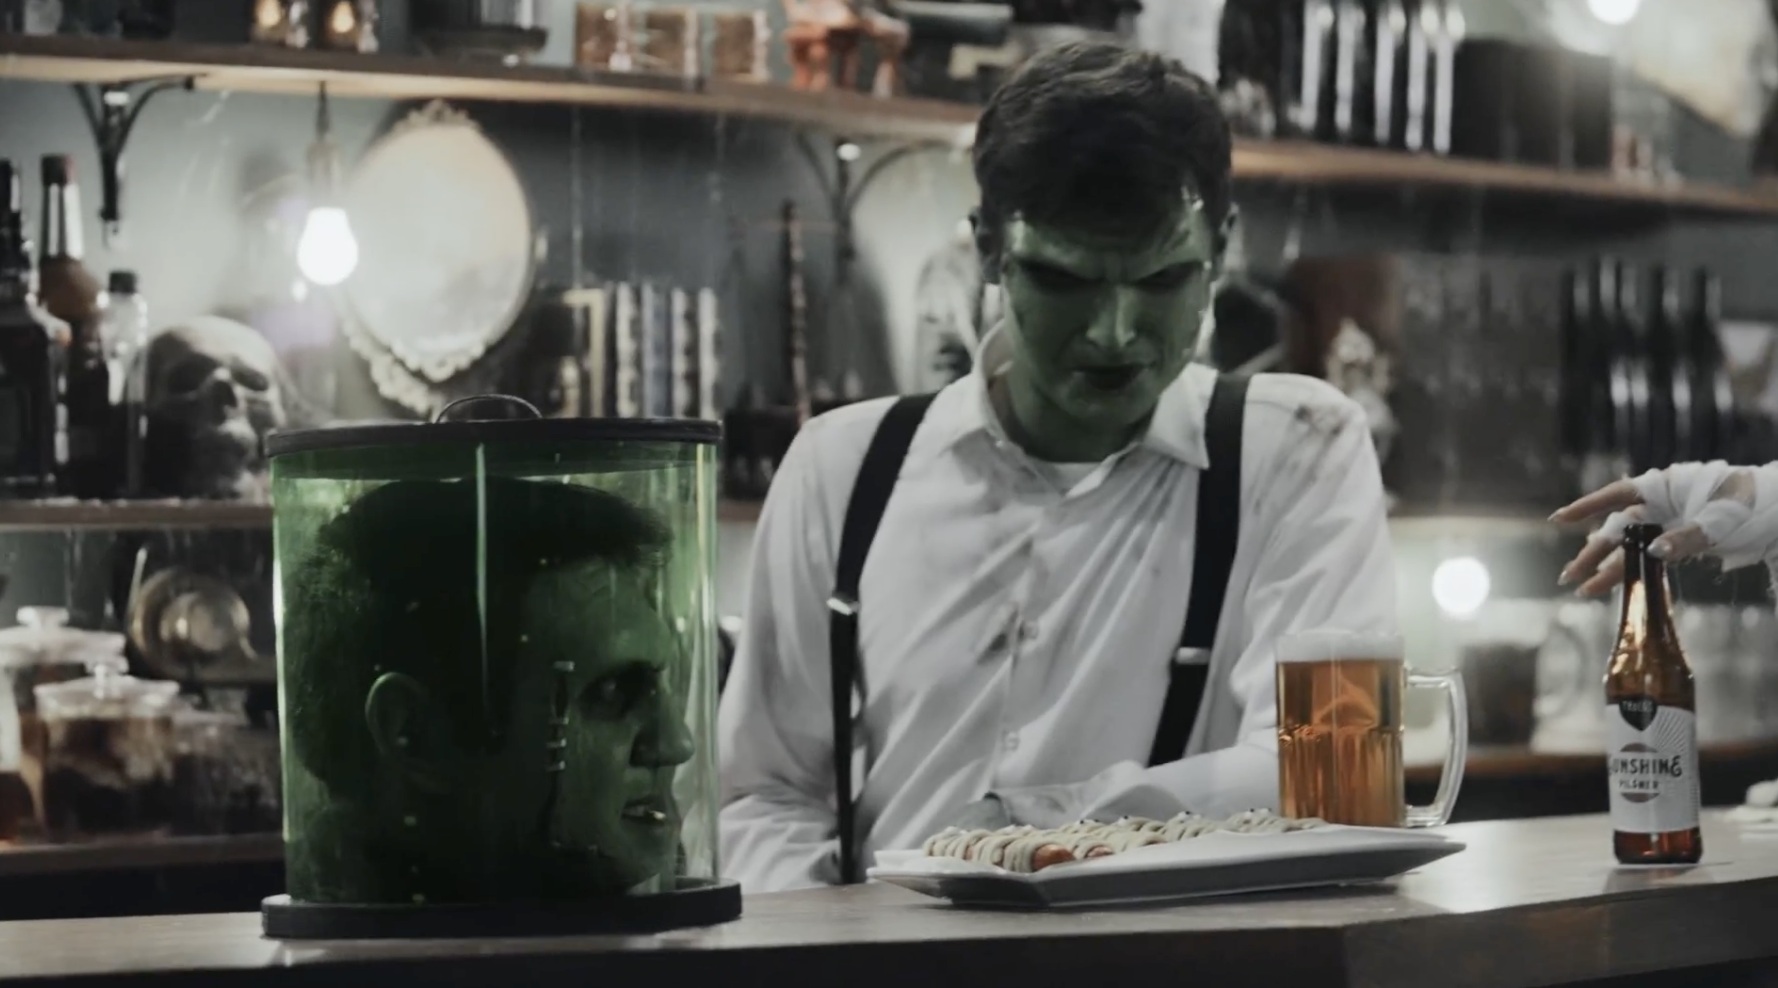 A Frankenstein monster head in a jar rests on a pub bar. Behind the bar is another Frankenstein monster.